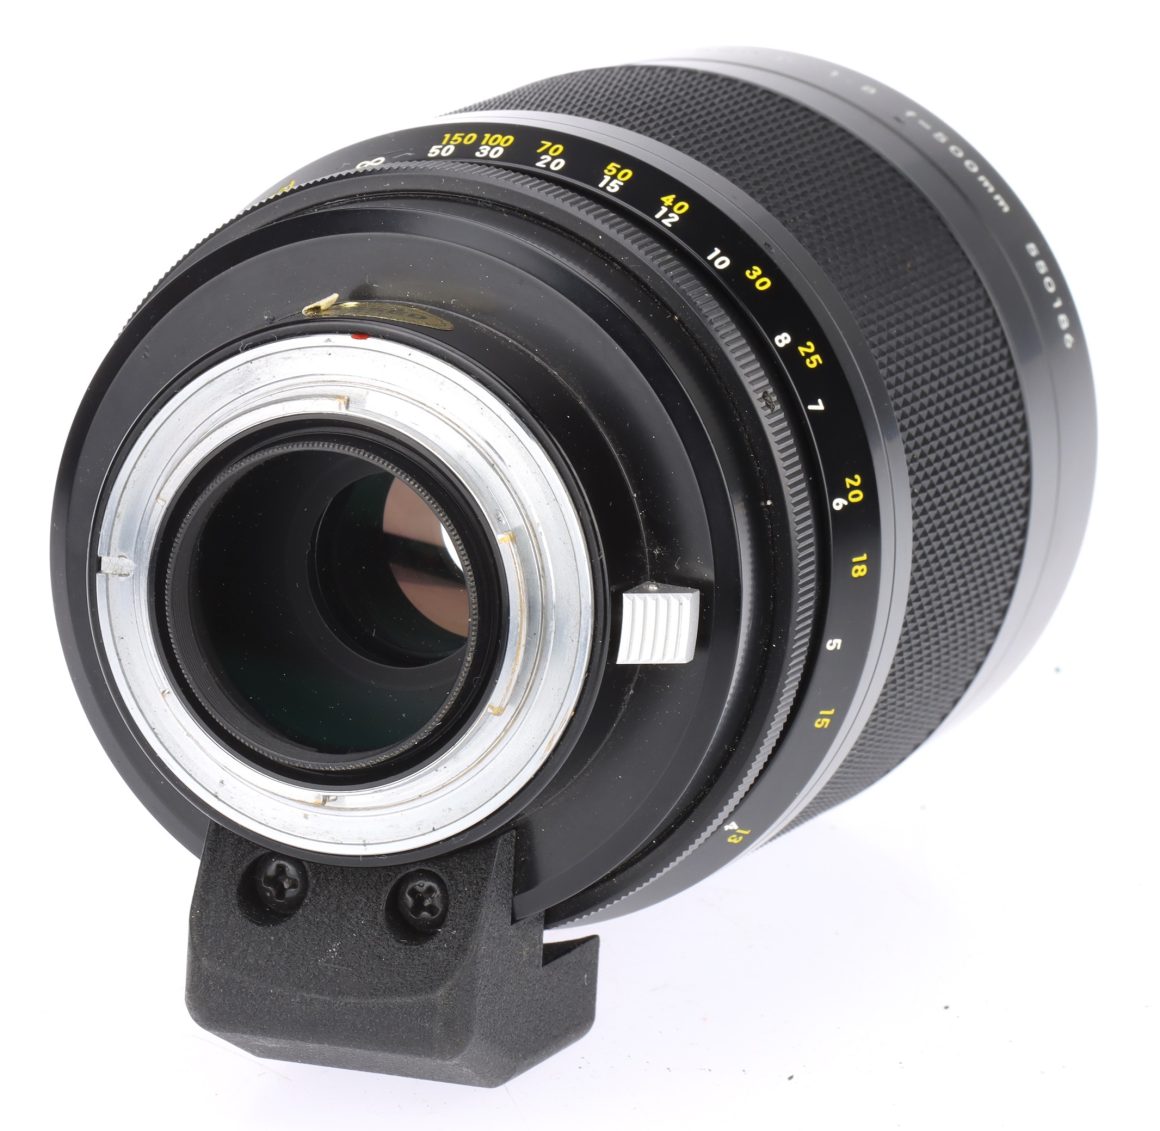 Nikon Reflex-Nikkor[·C] 500mm F/8 | LENS-DB.COM